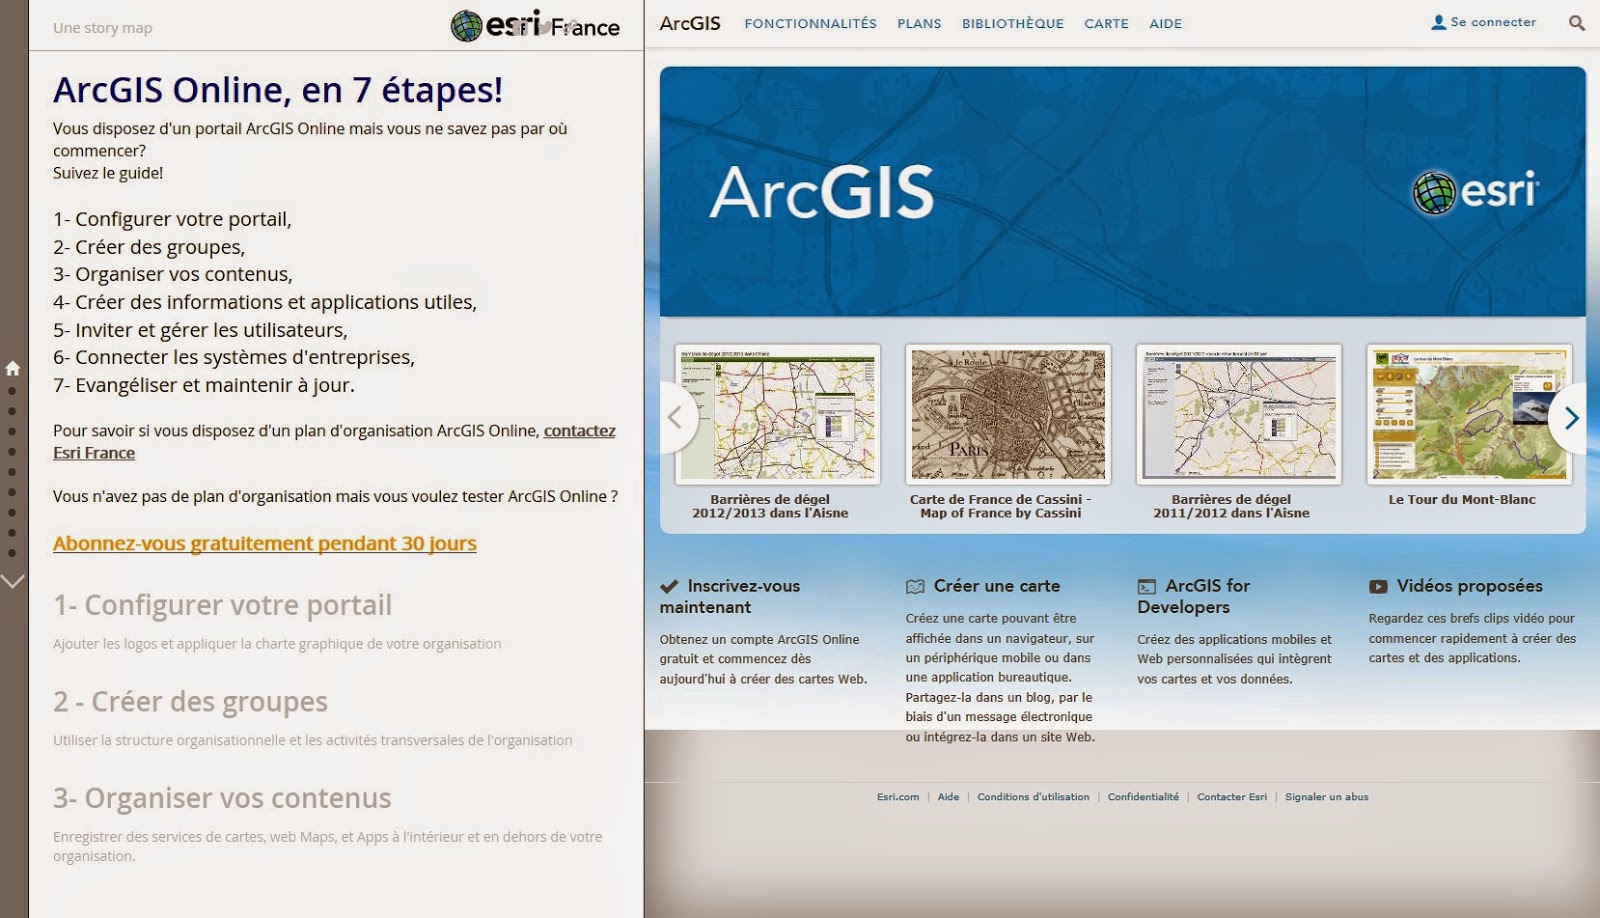 http://esrifrance.maps.arcgis.com/apps/MapJournal/?appid=e11d3112fb414b59bd645be11bc077a1